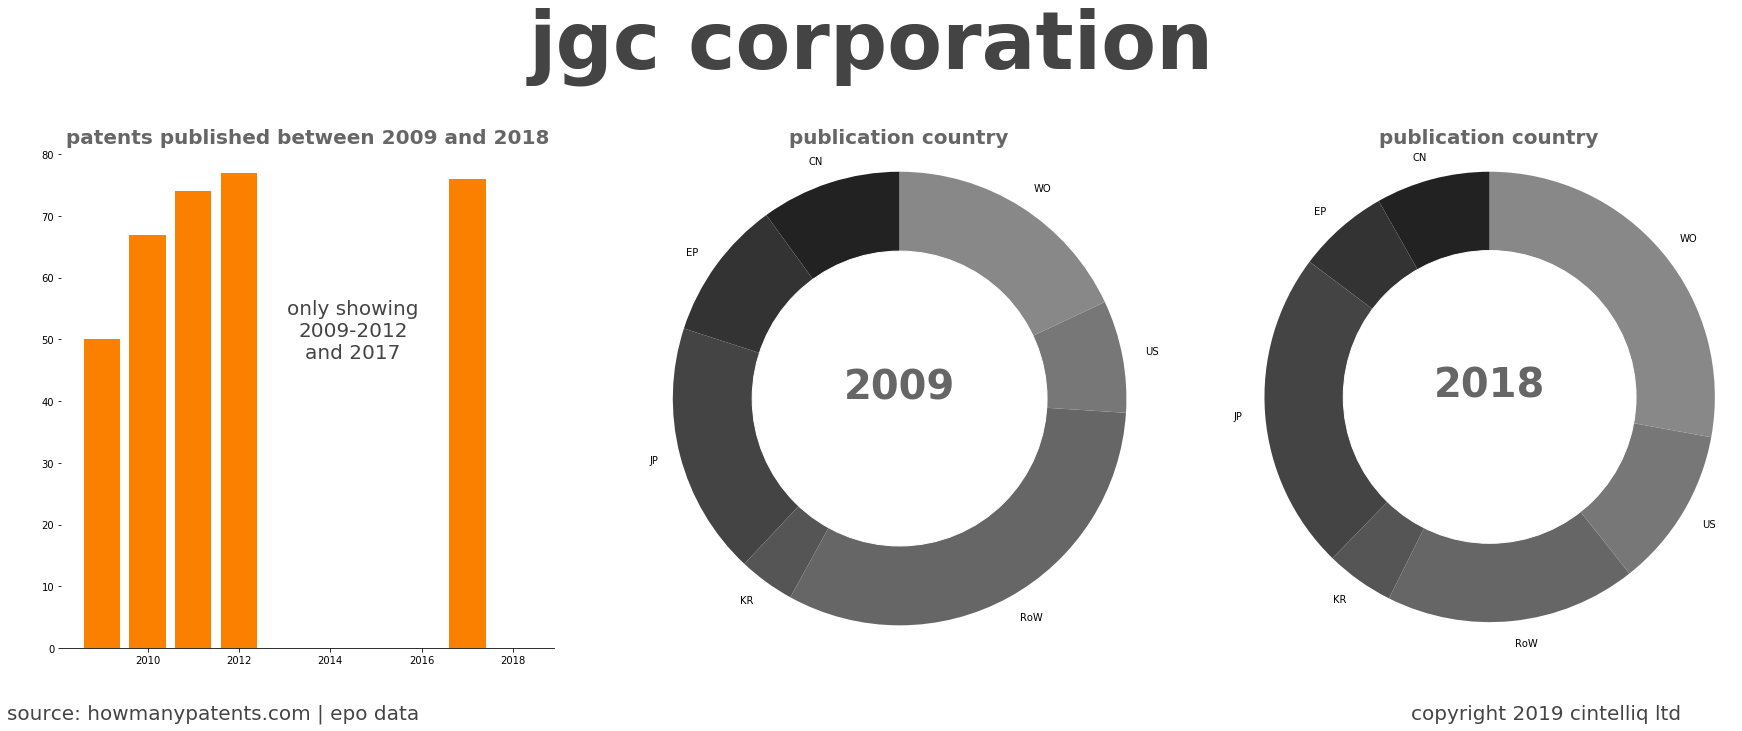 summary of patents for Jgc Corporation